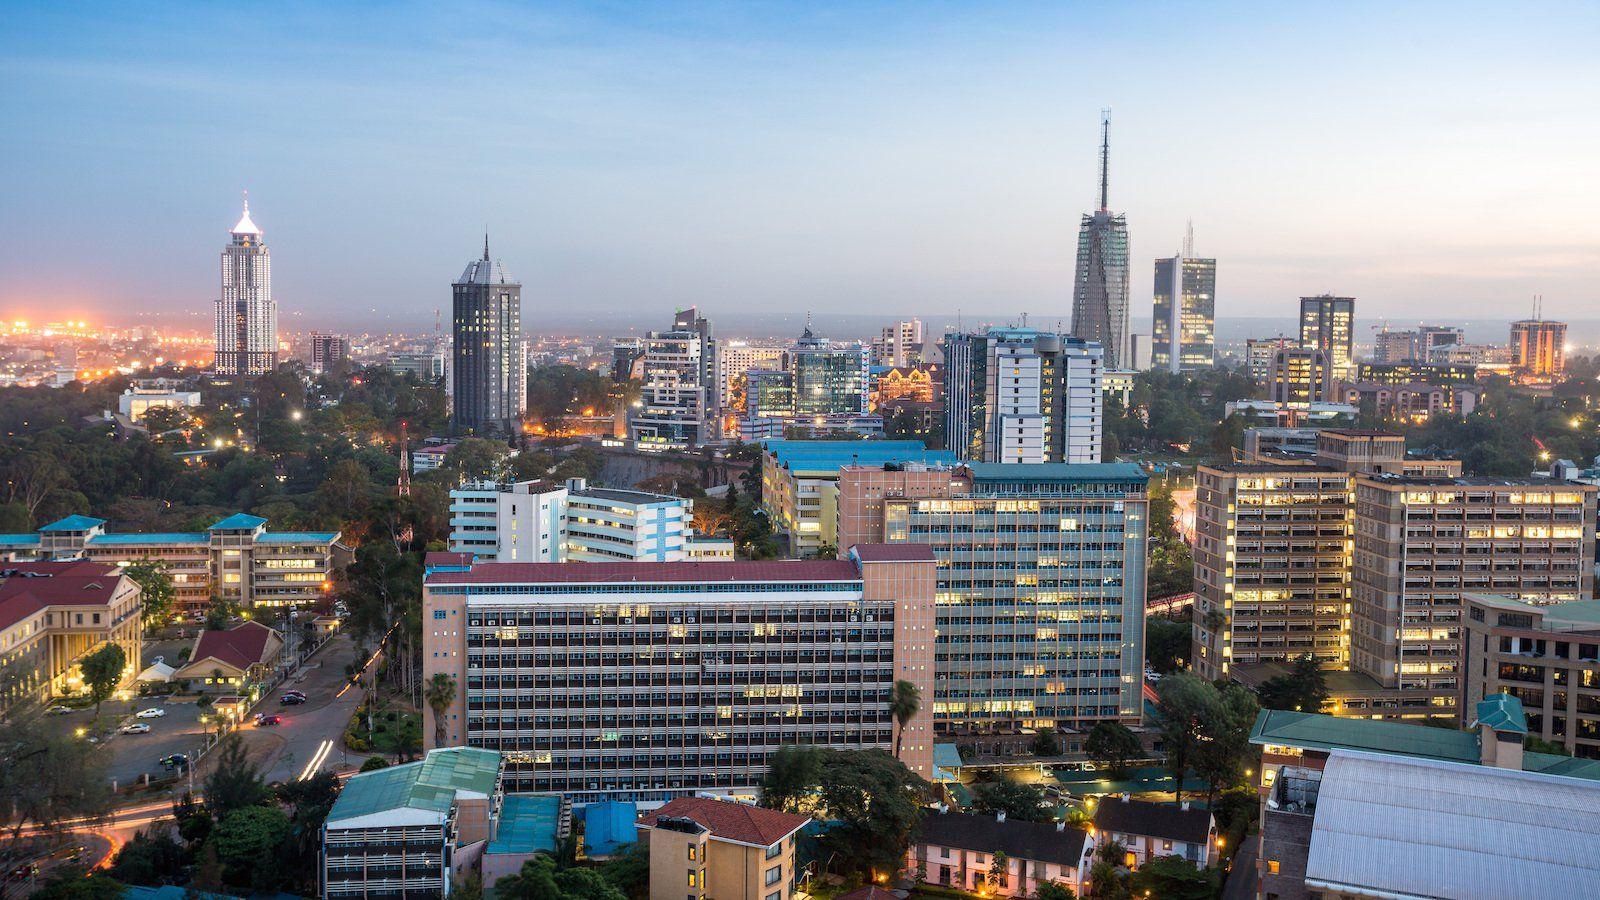 Nairobi Wallpapers - Top Free Nairobi Backgrounds ...